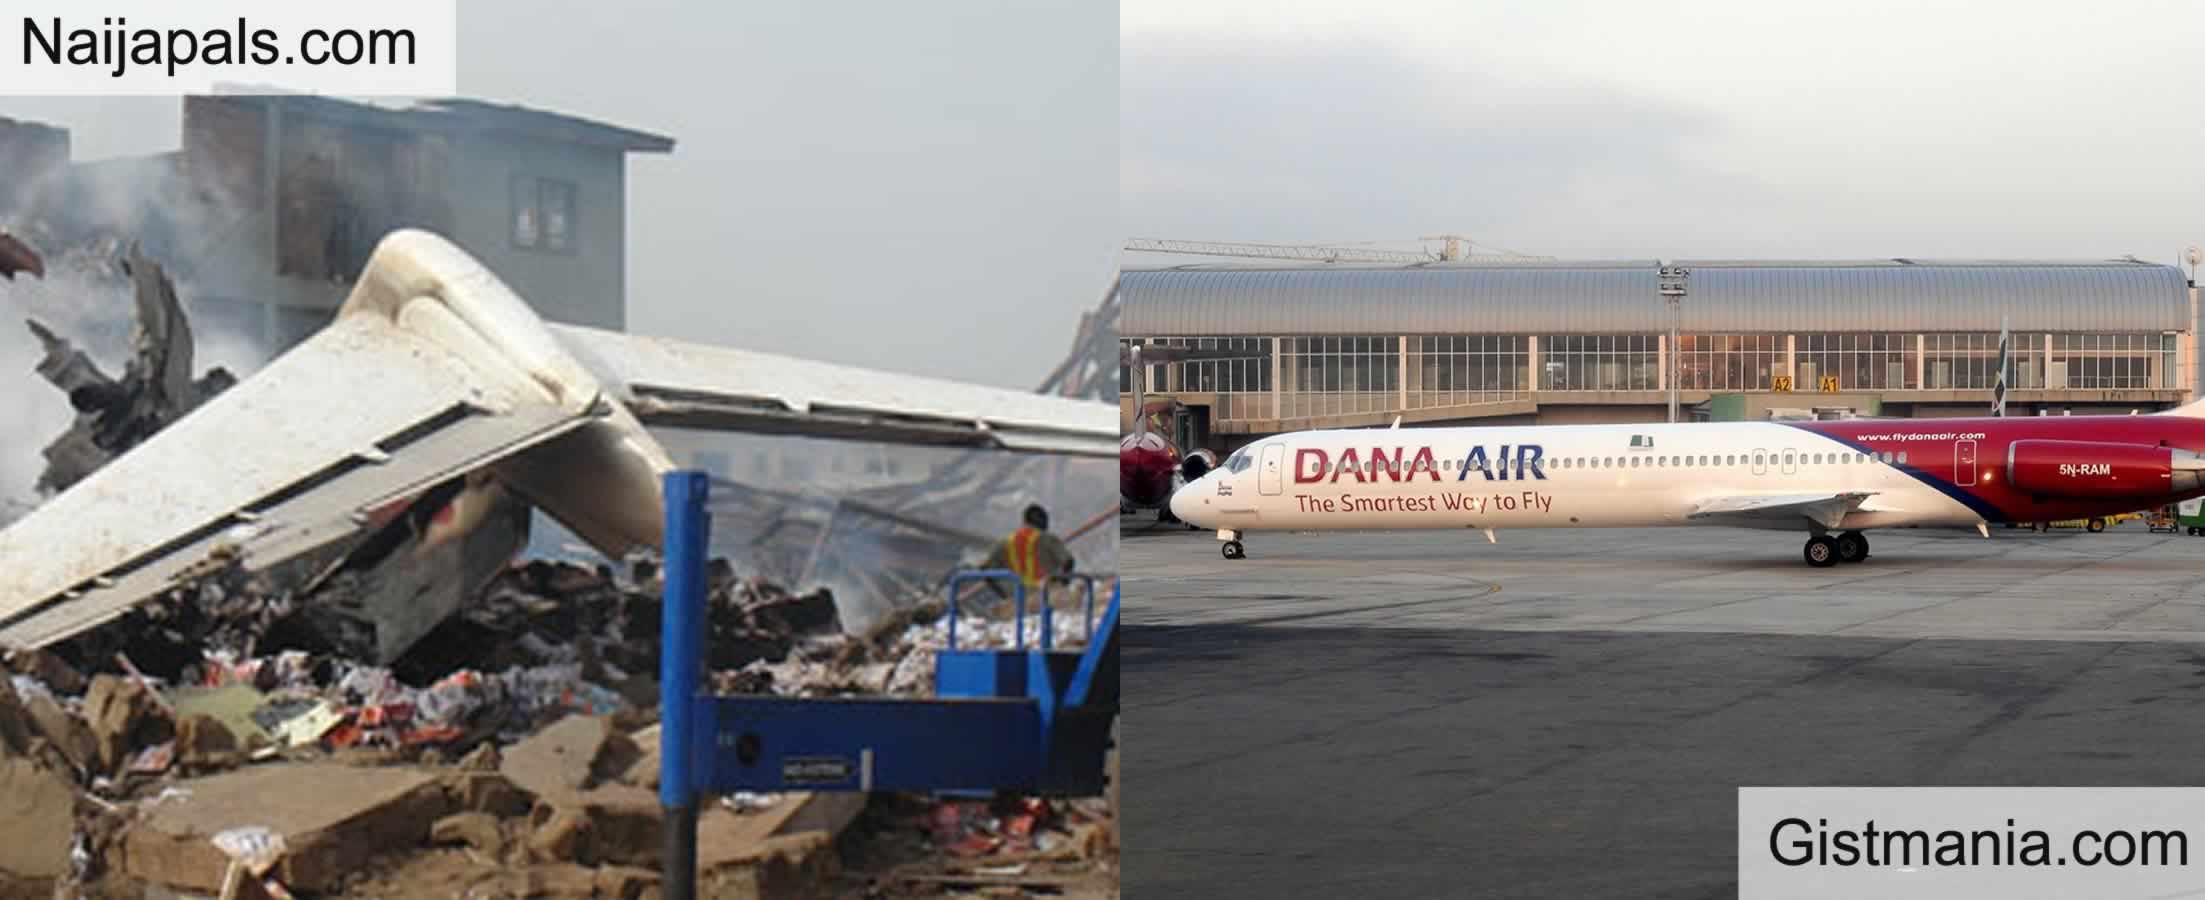 Dana Air Plane Veered Off The Runaway While Landing In Lagos